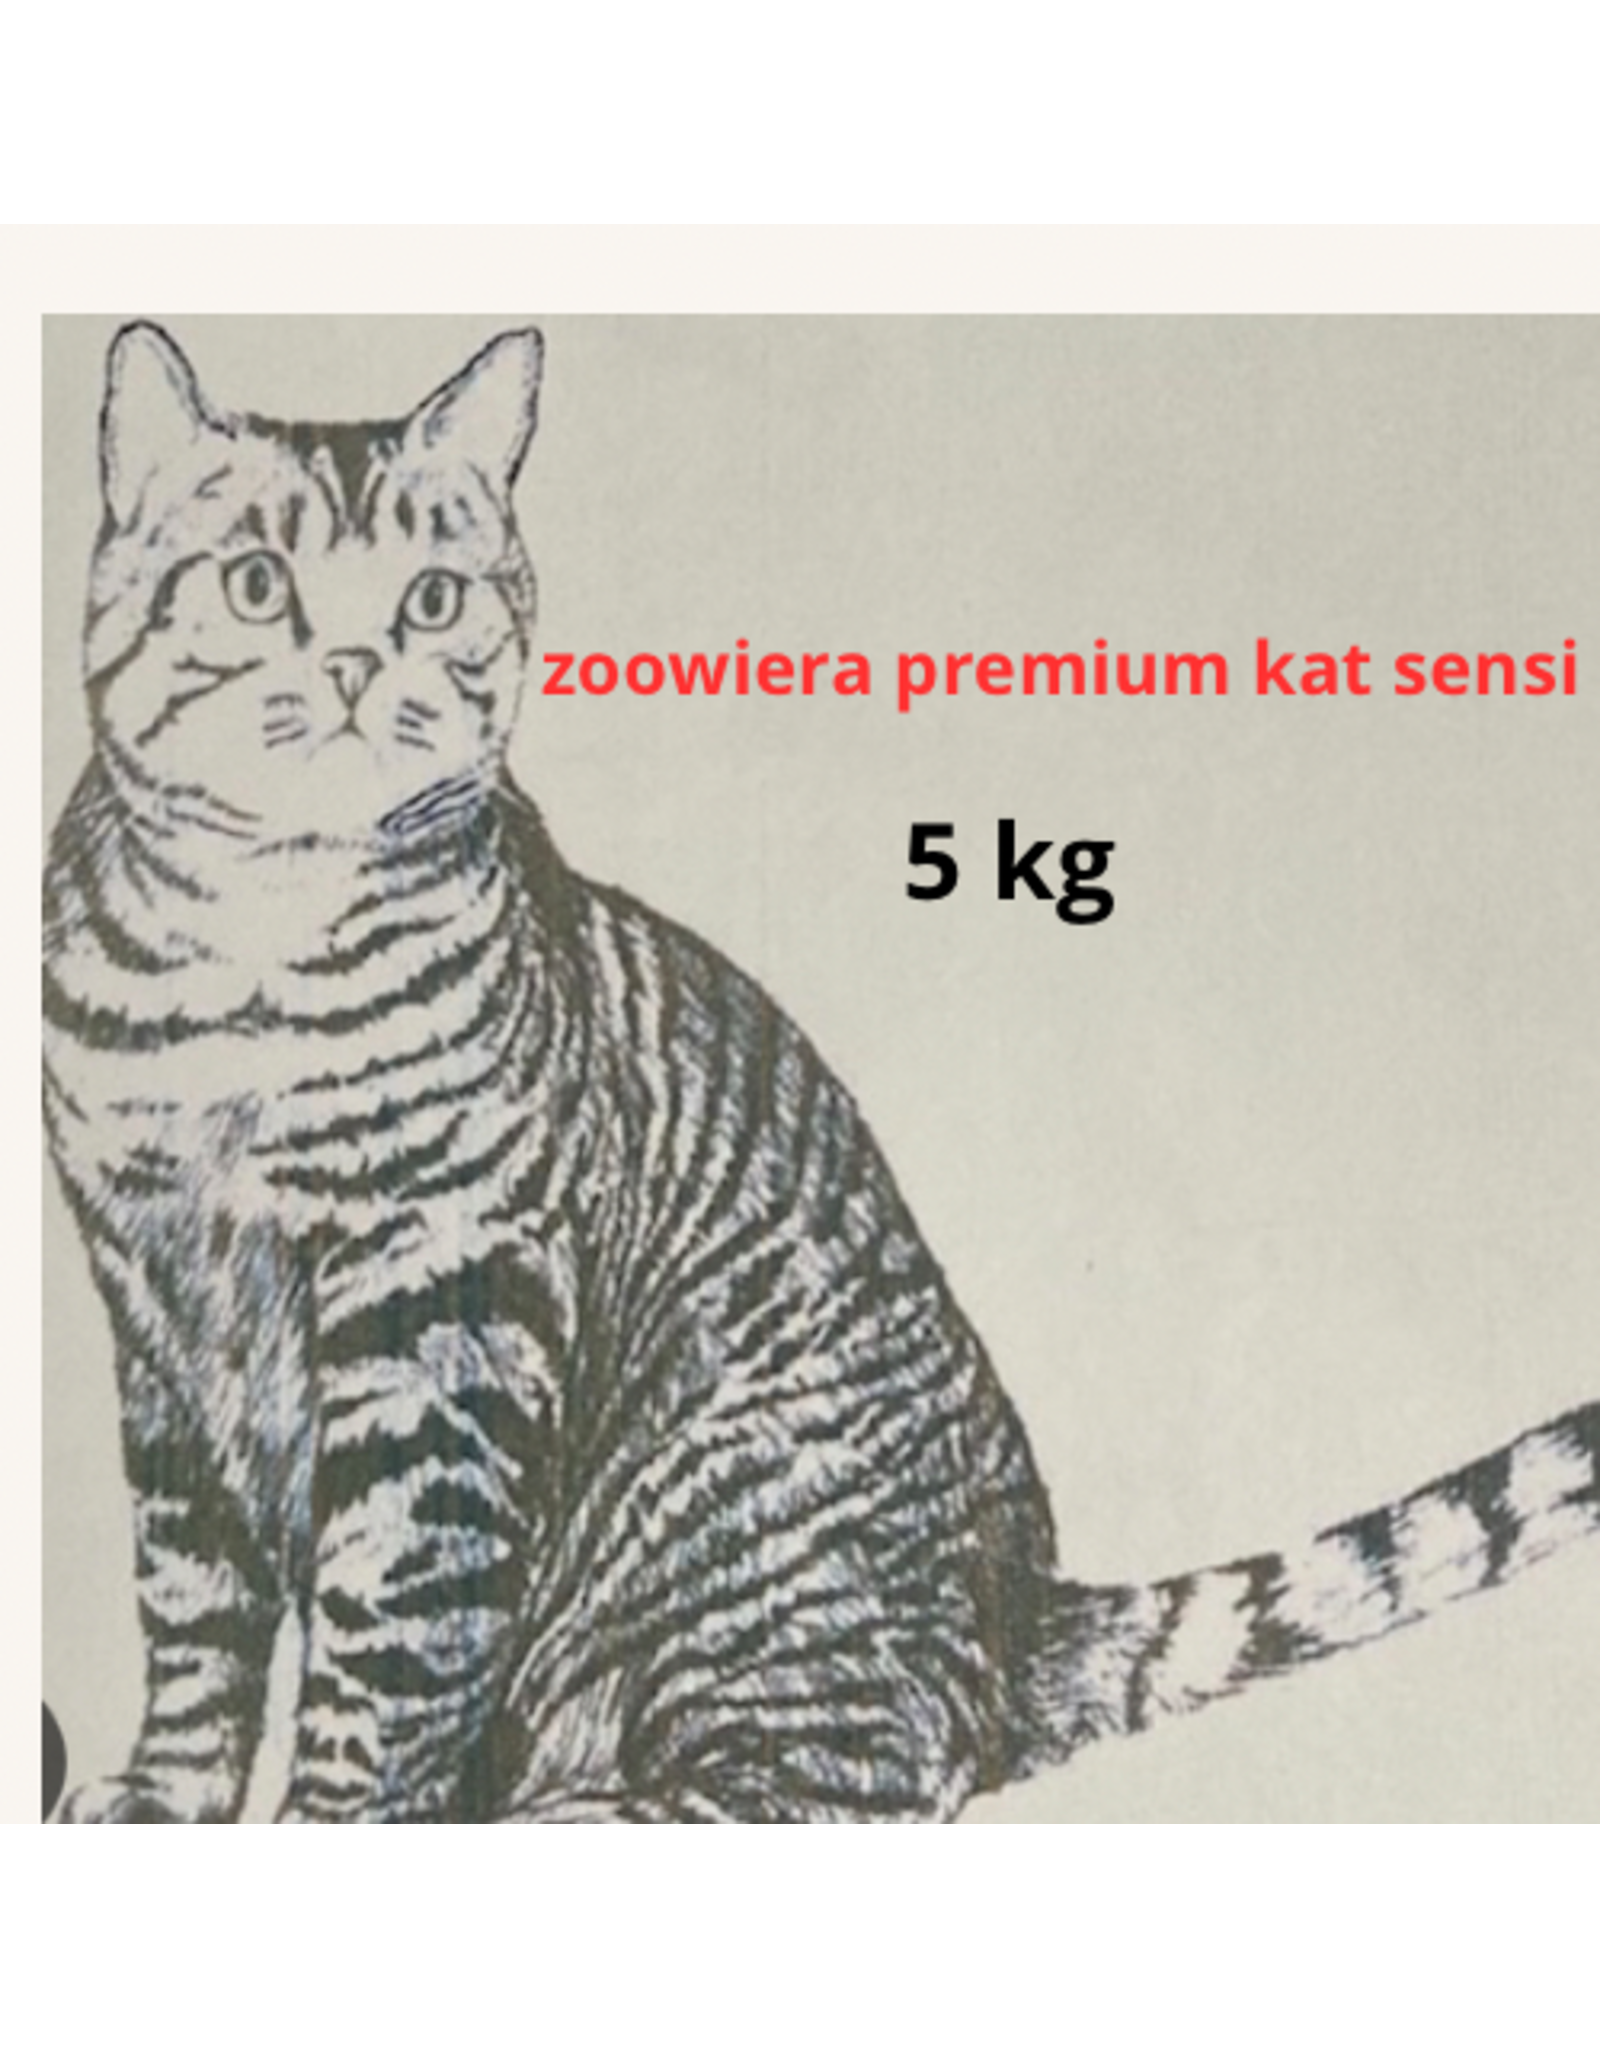 Zoowiera premium kat sensi 5 kg